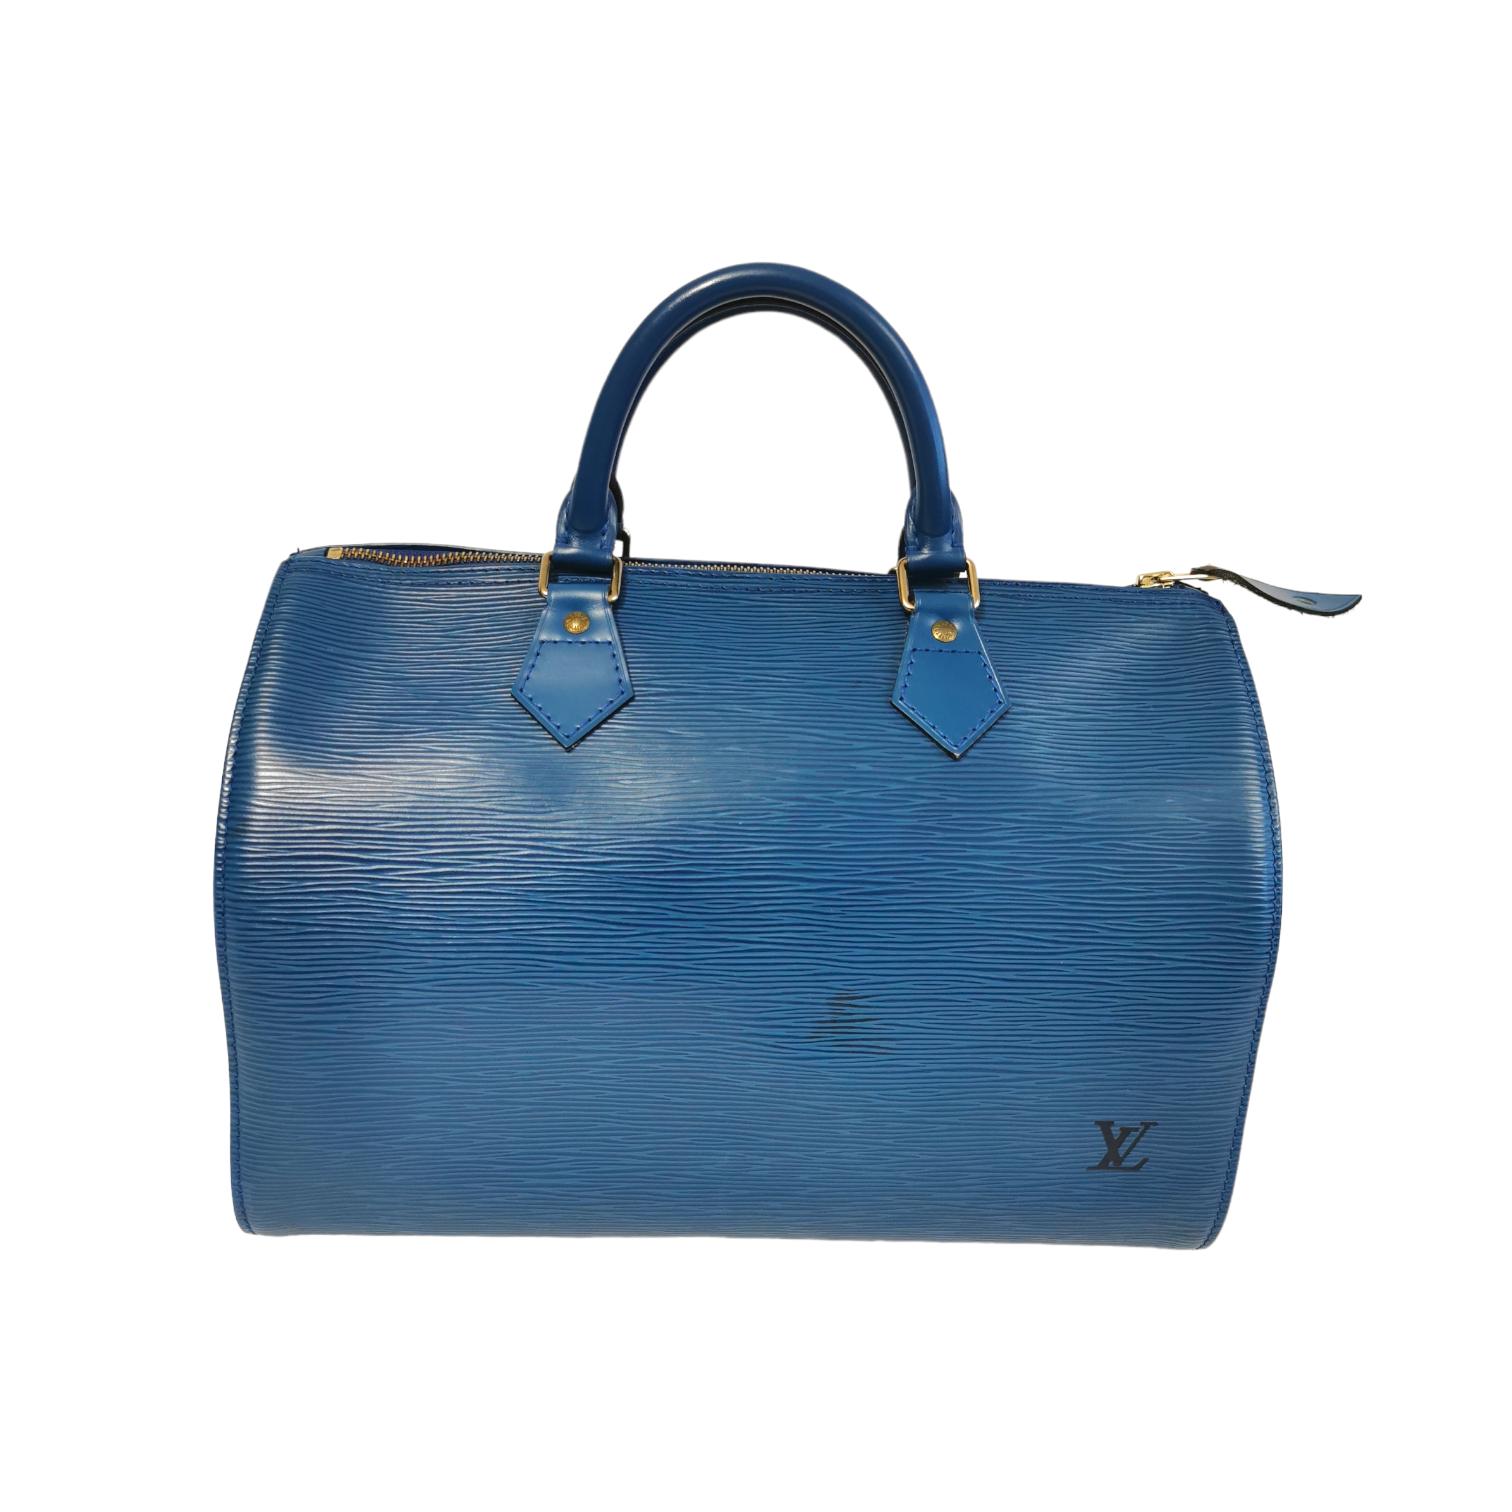 Louis Vuitton Speedy Leather Handbag